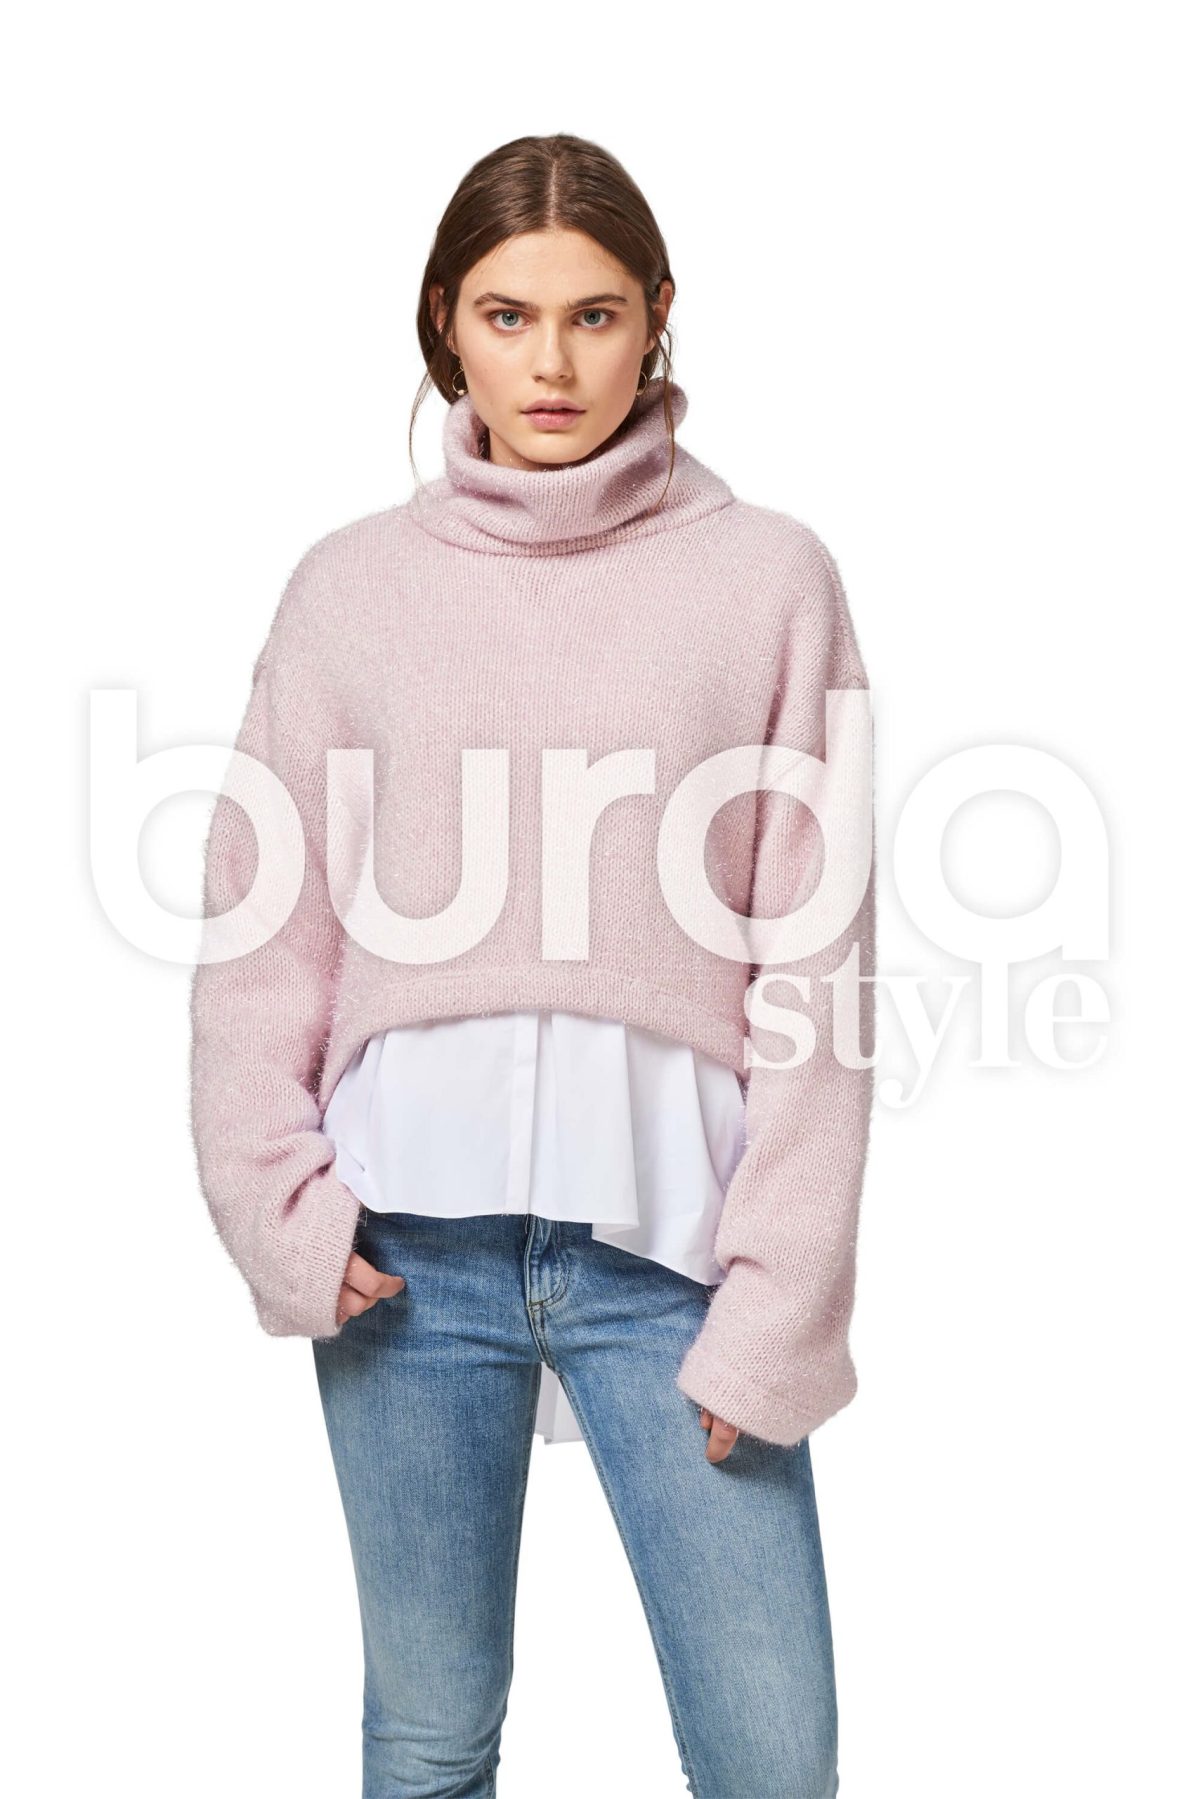 Burda Style Pattern B6476 Women's Pullover Collared Top